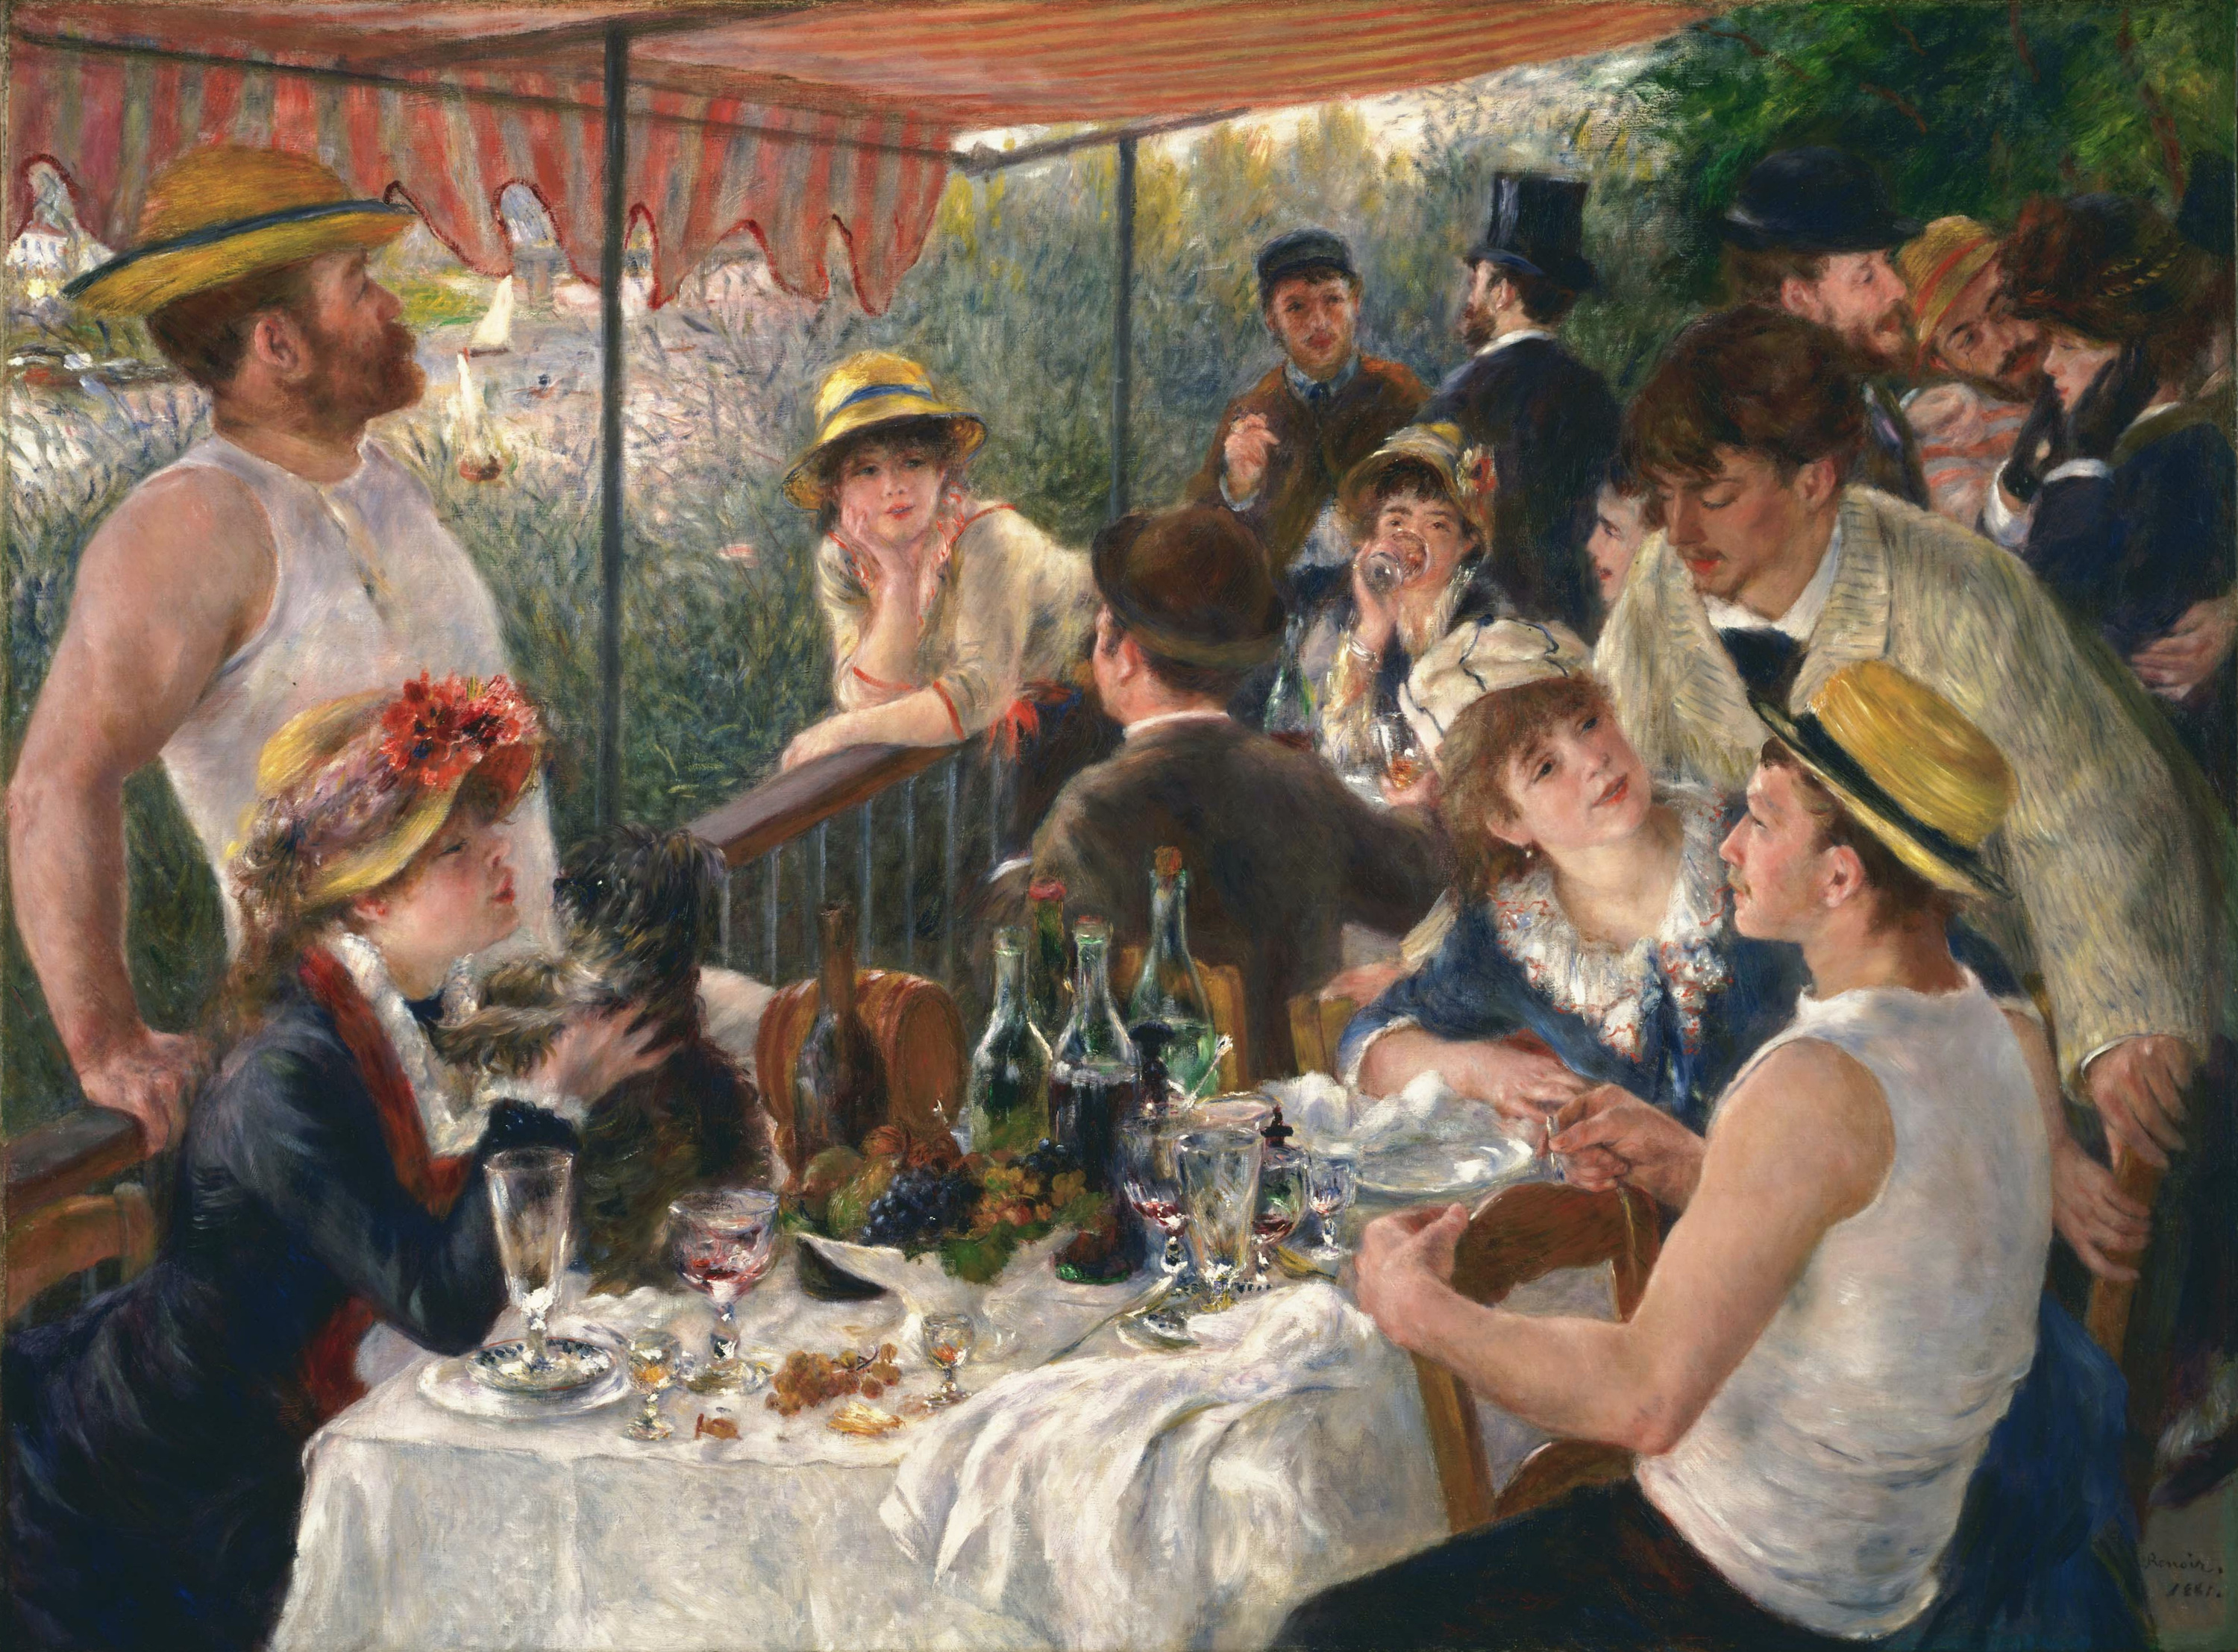 Tekne Partisinde Öğle Yemeği (orig. "Luncheon of the Boating Party") by Pierre-Auguste Renoir - 1880-1881 - 175.6 x 130.2 cm 